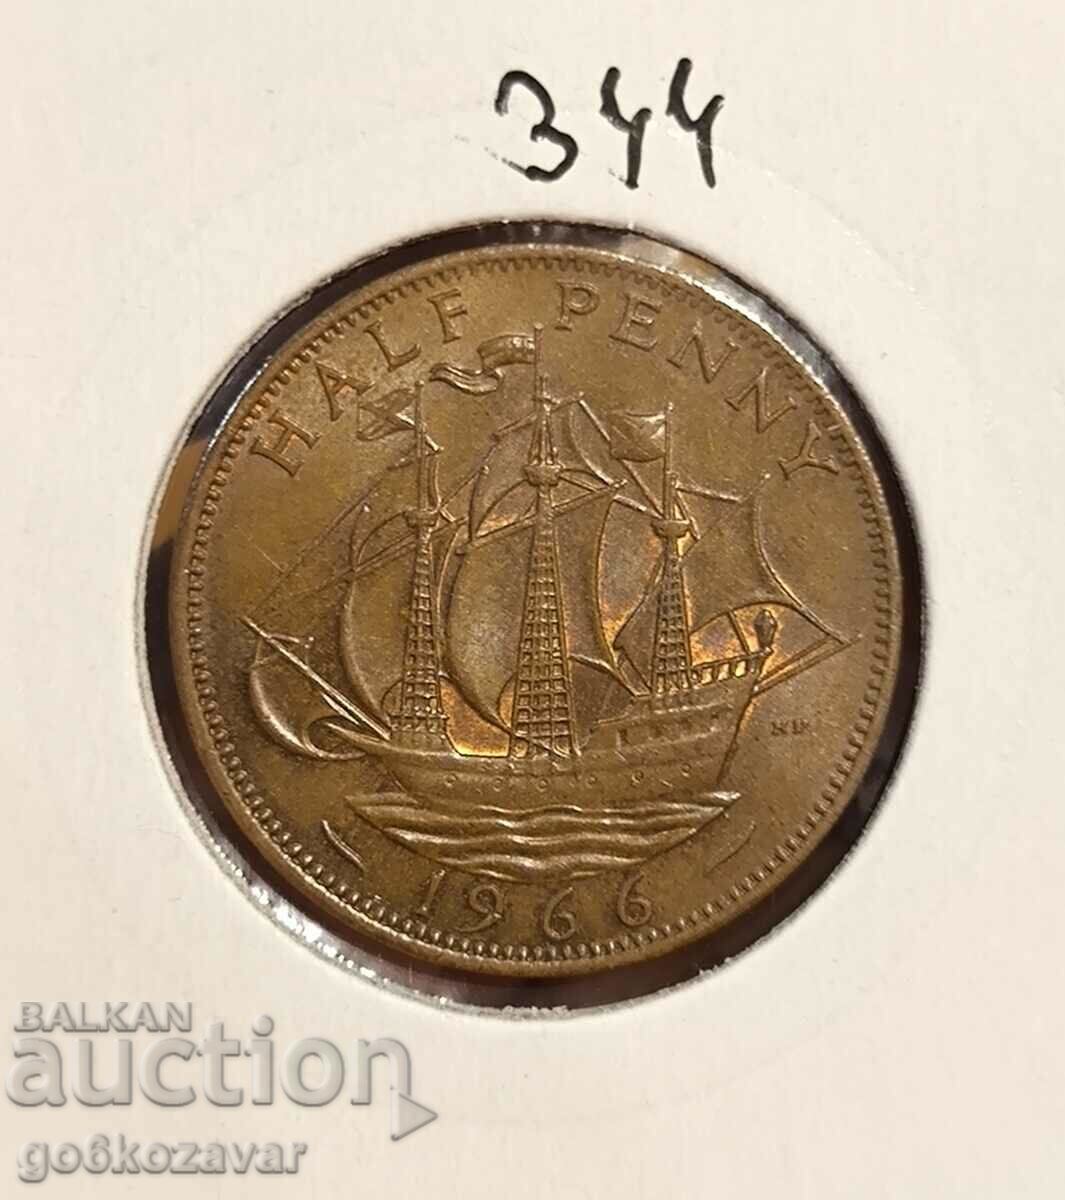 Great Britain 1/2 Penny 1966 UNC